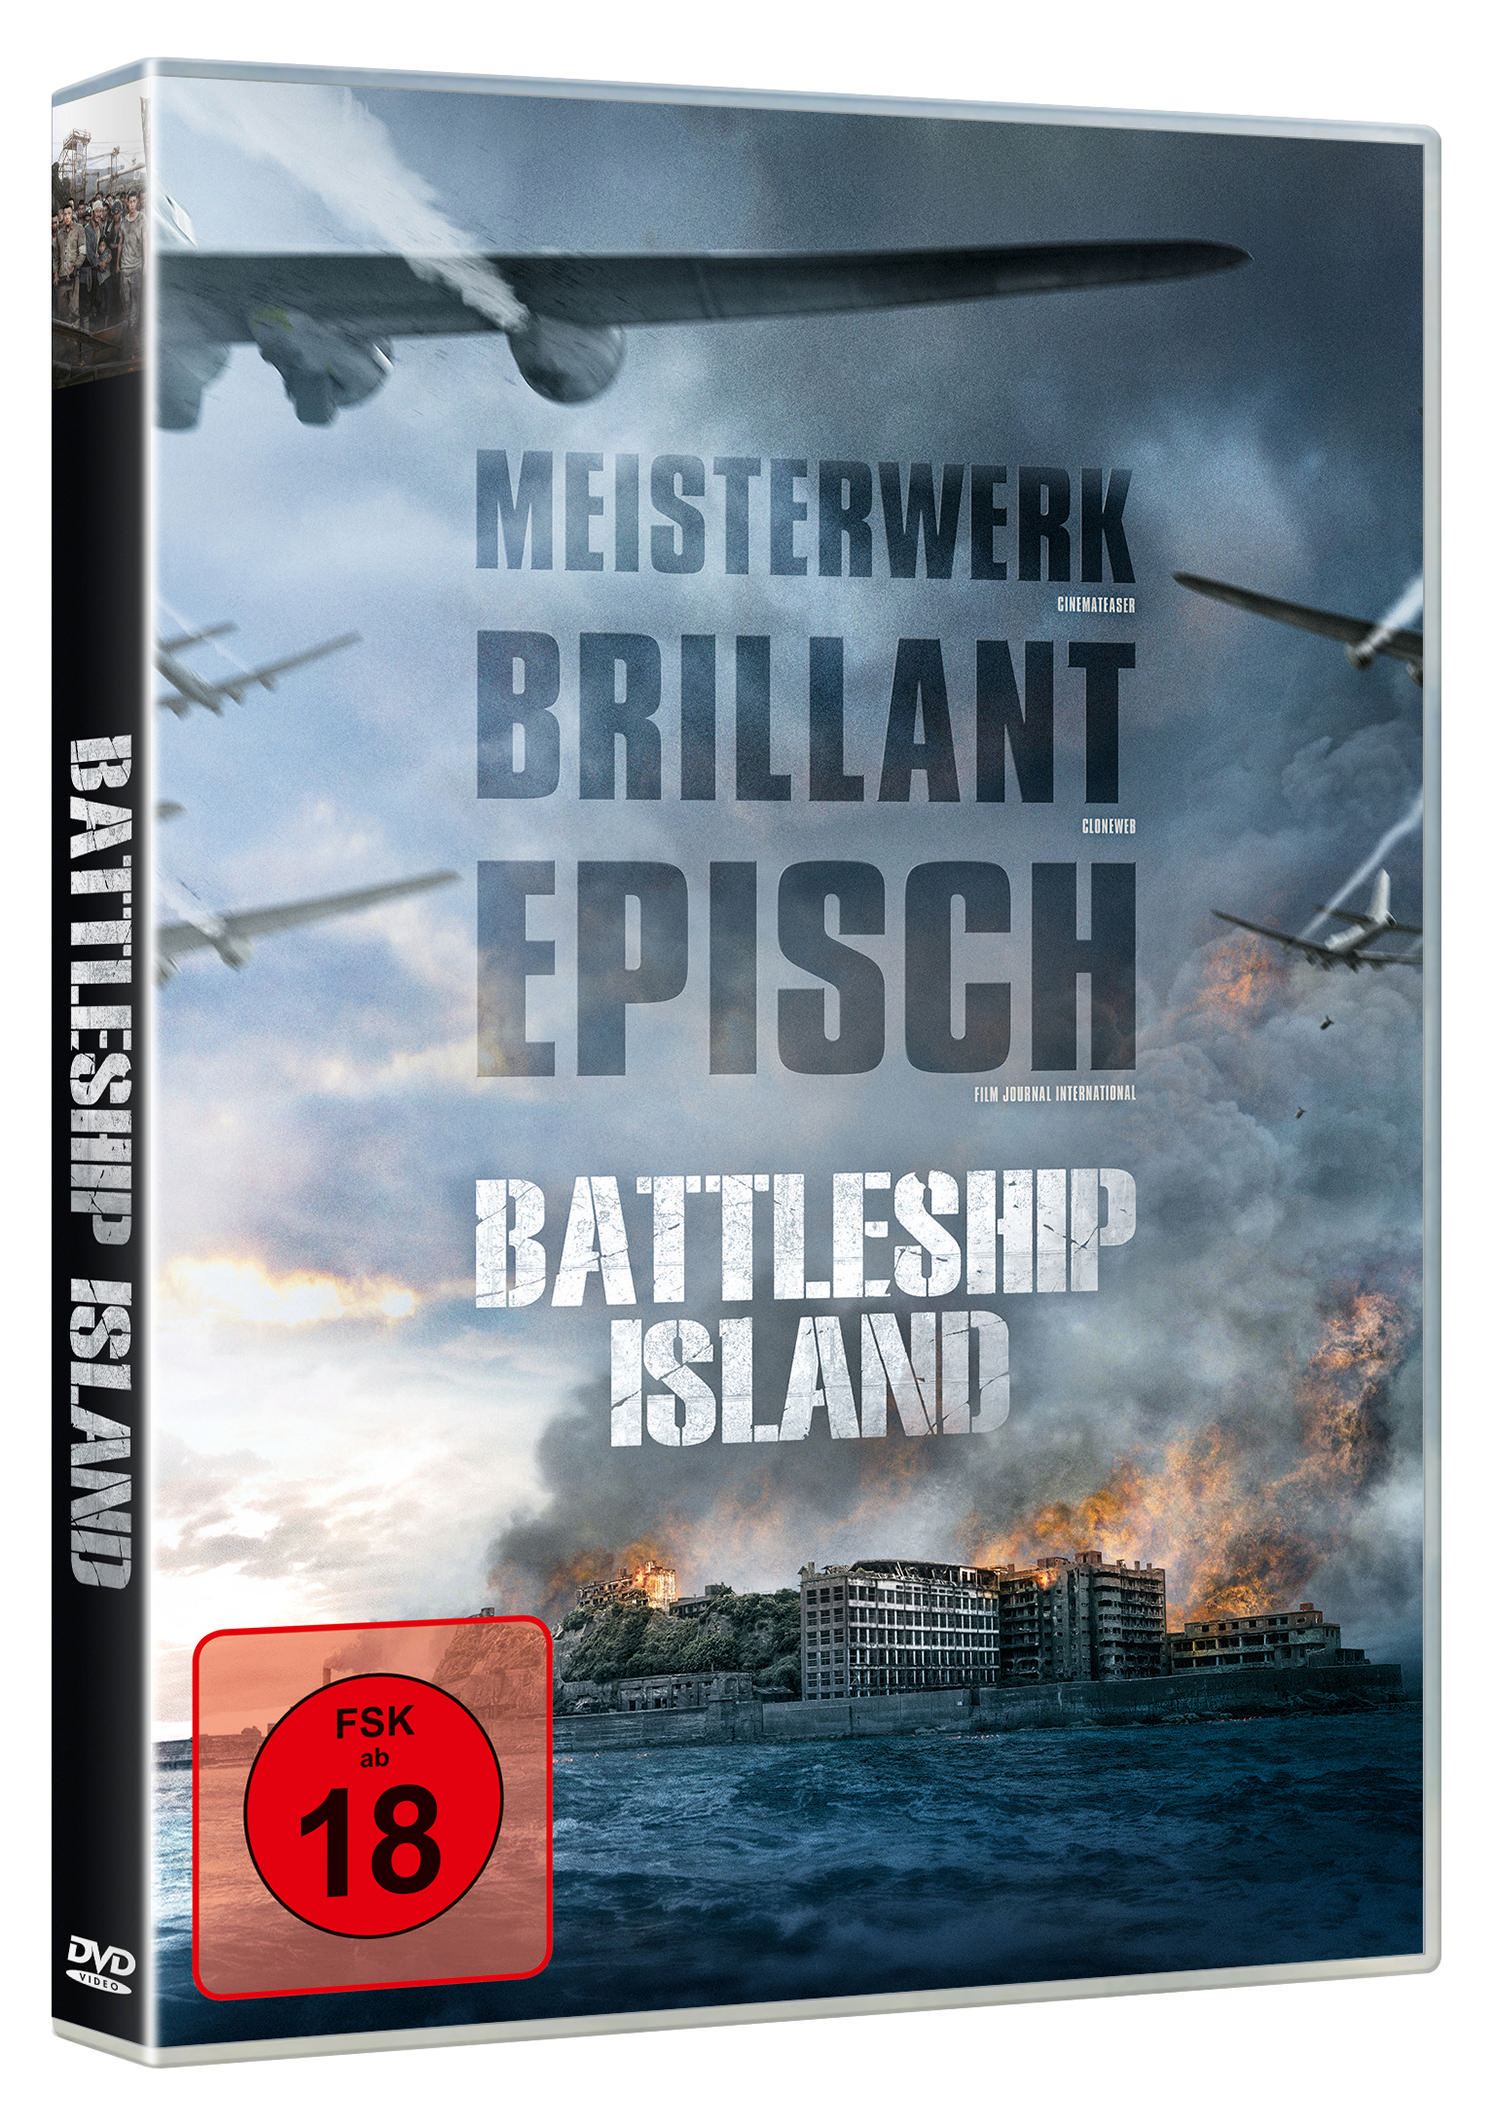 DVD ISLAND BATTLESHIP